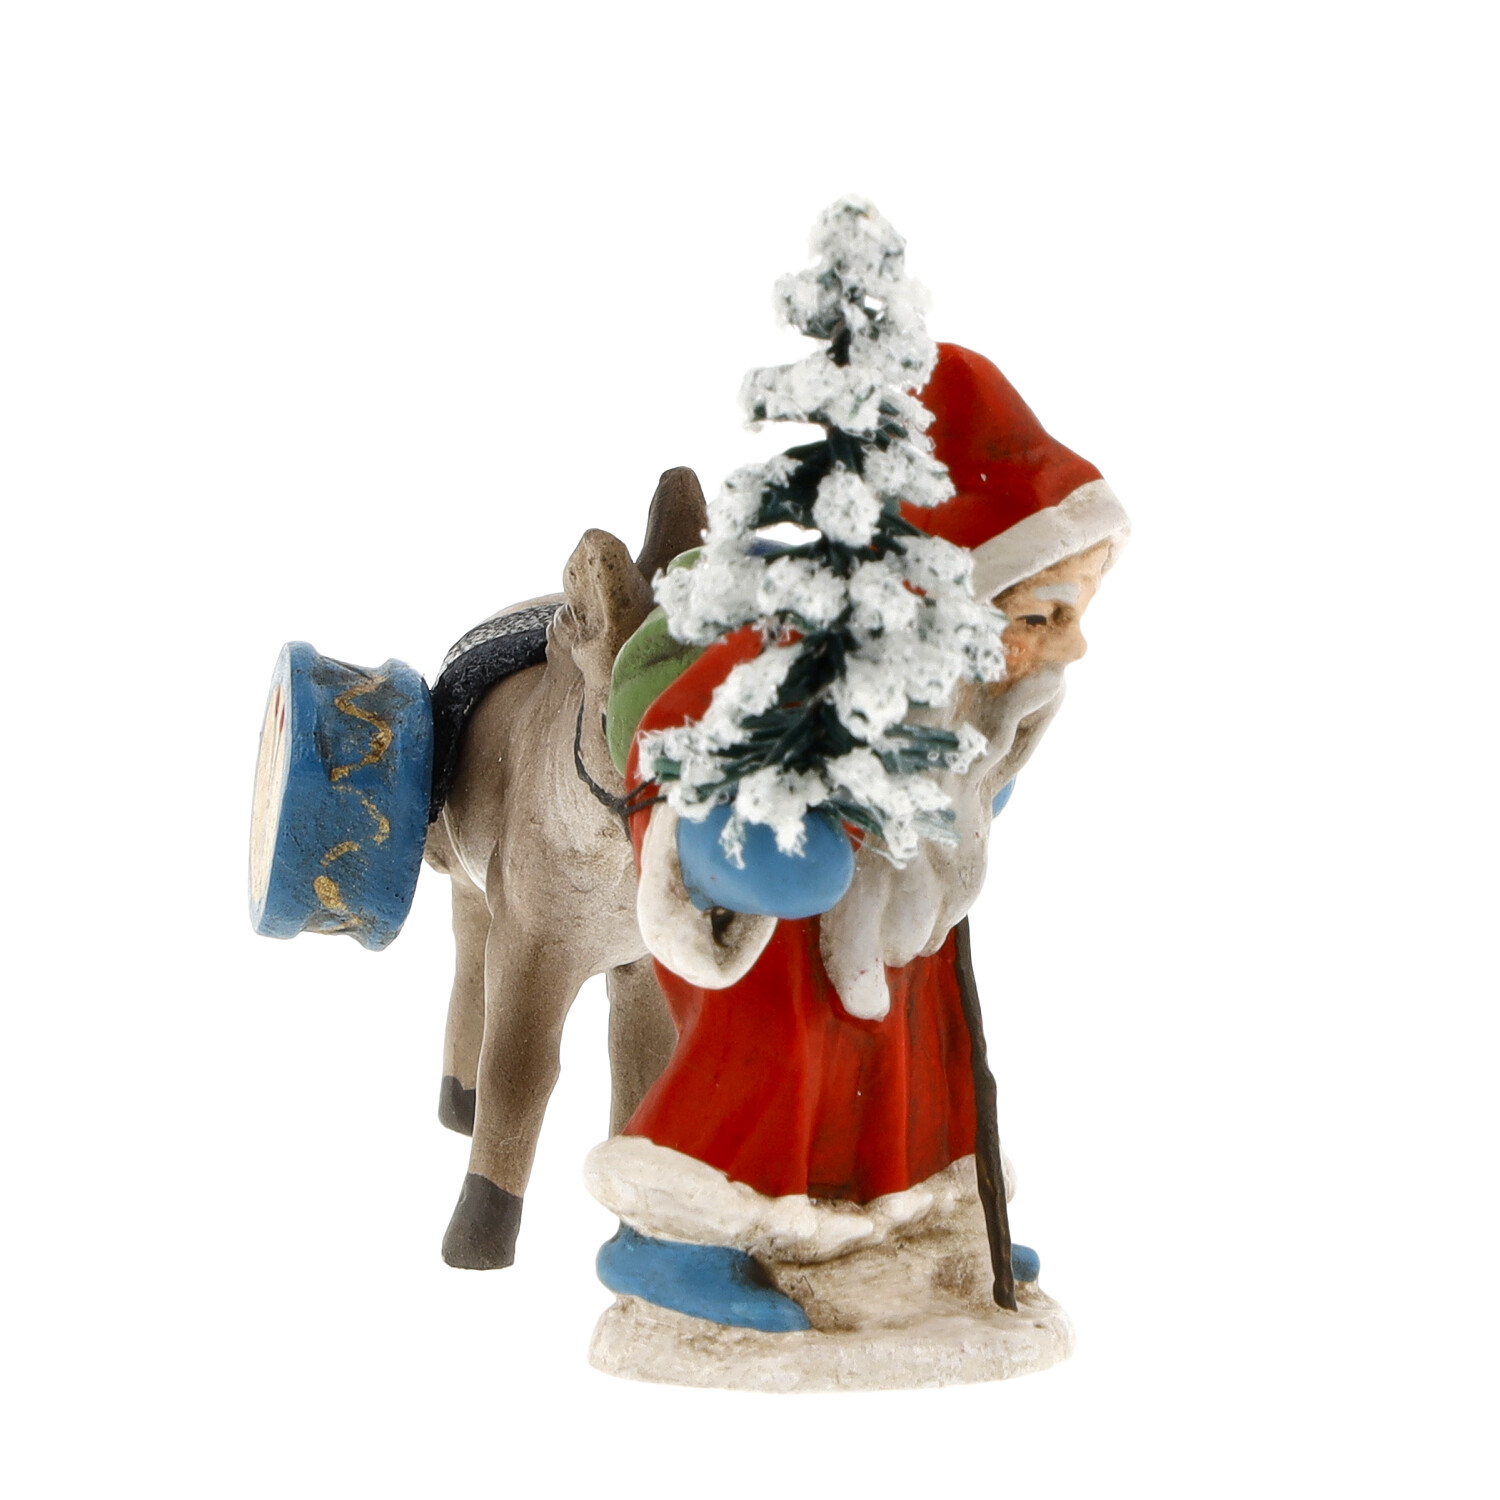 Miniature Santa with donkey - Marolin Papermaché - made in Germany